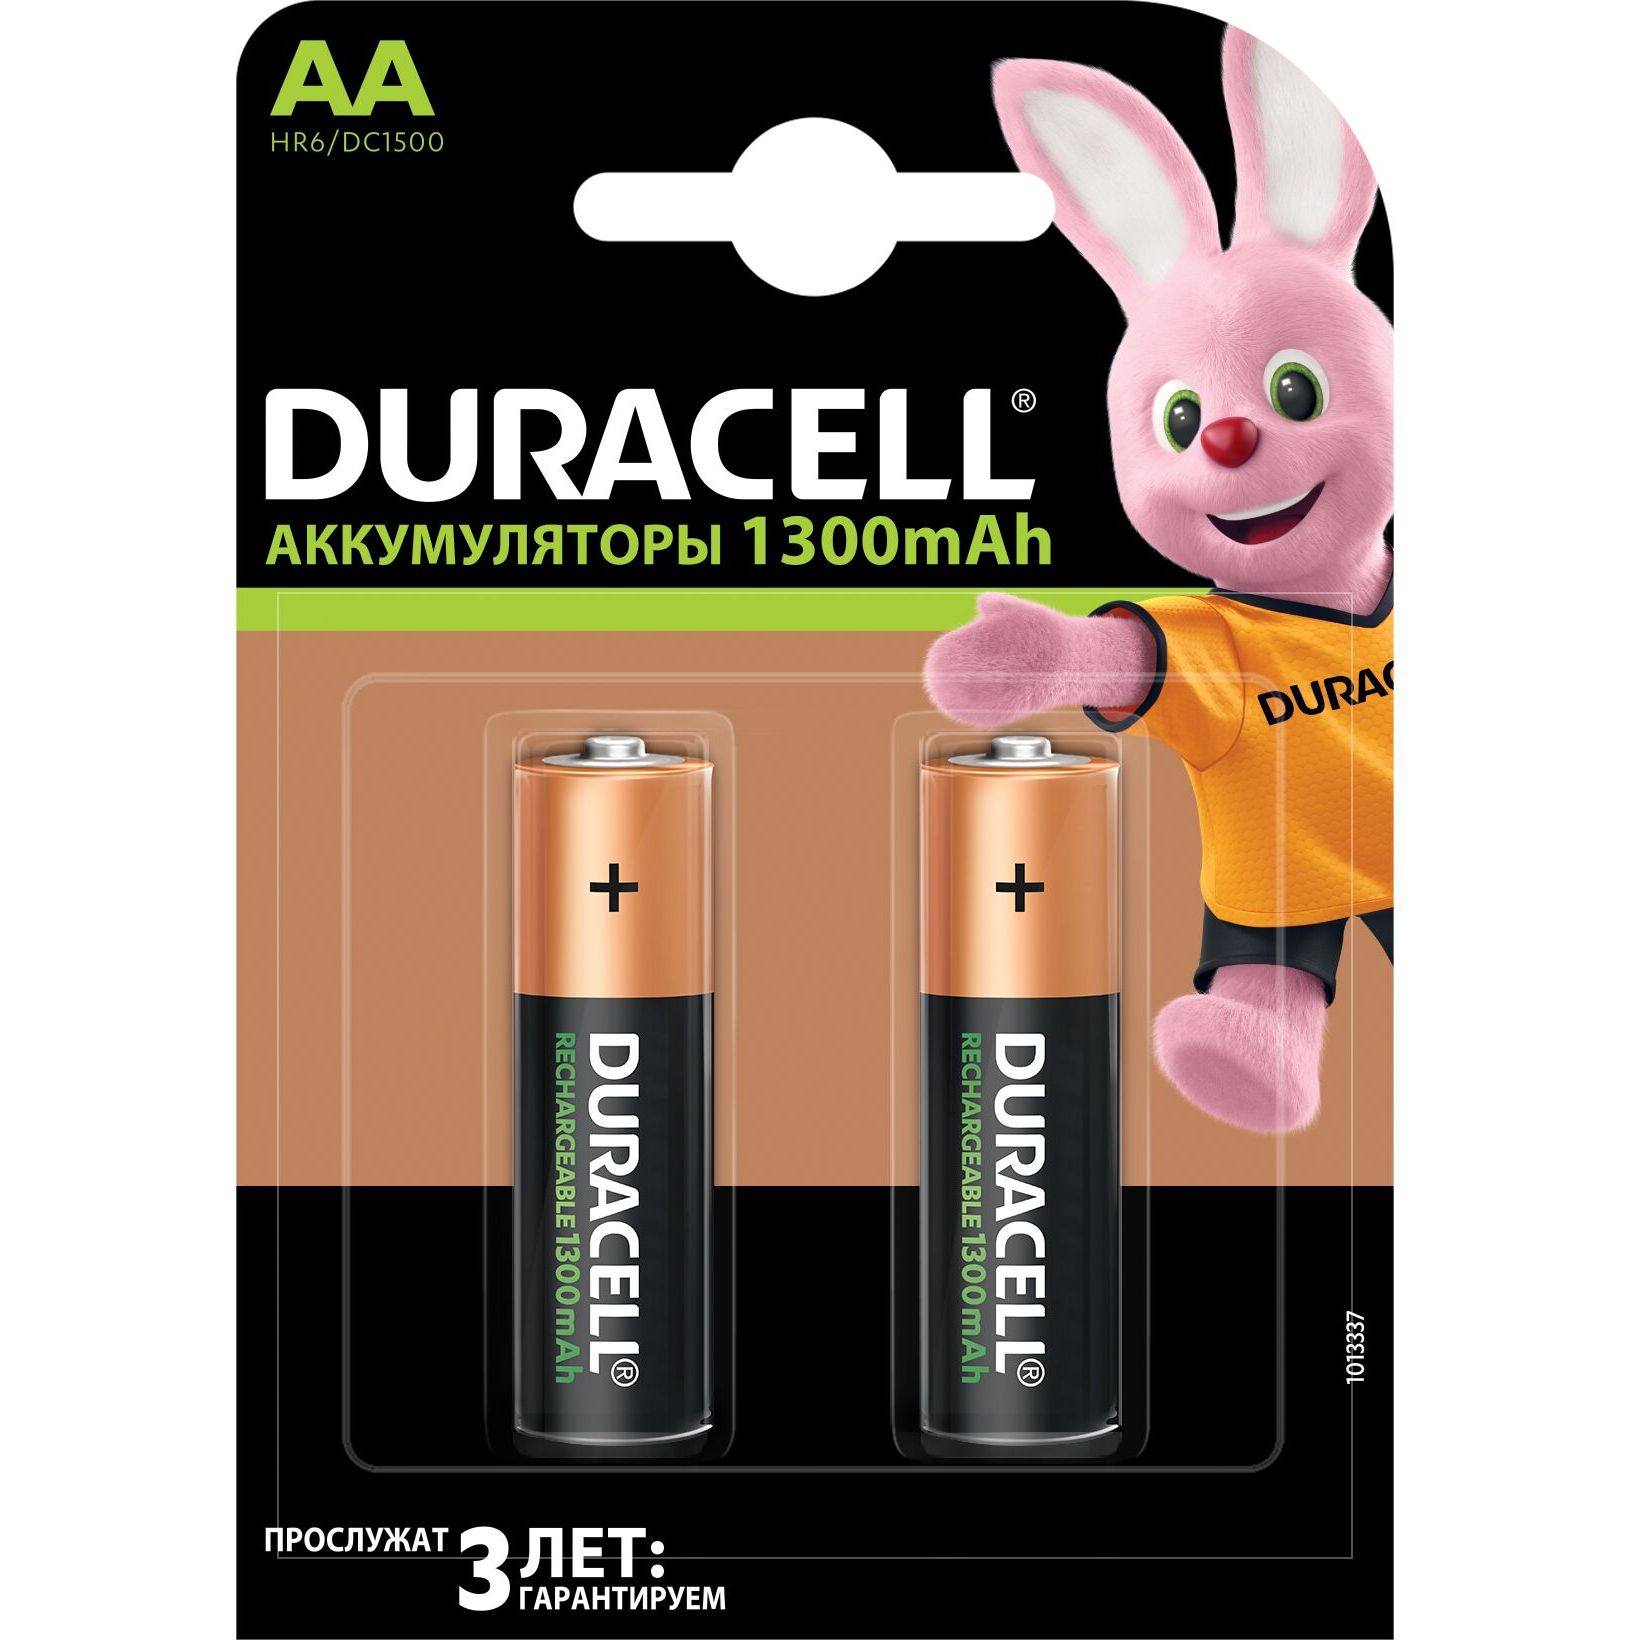 Аккумуляторы Duracell Rechargeable AA 1300 mAh HR6/DC1500, 2 шт. (736720) - фото 2